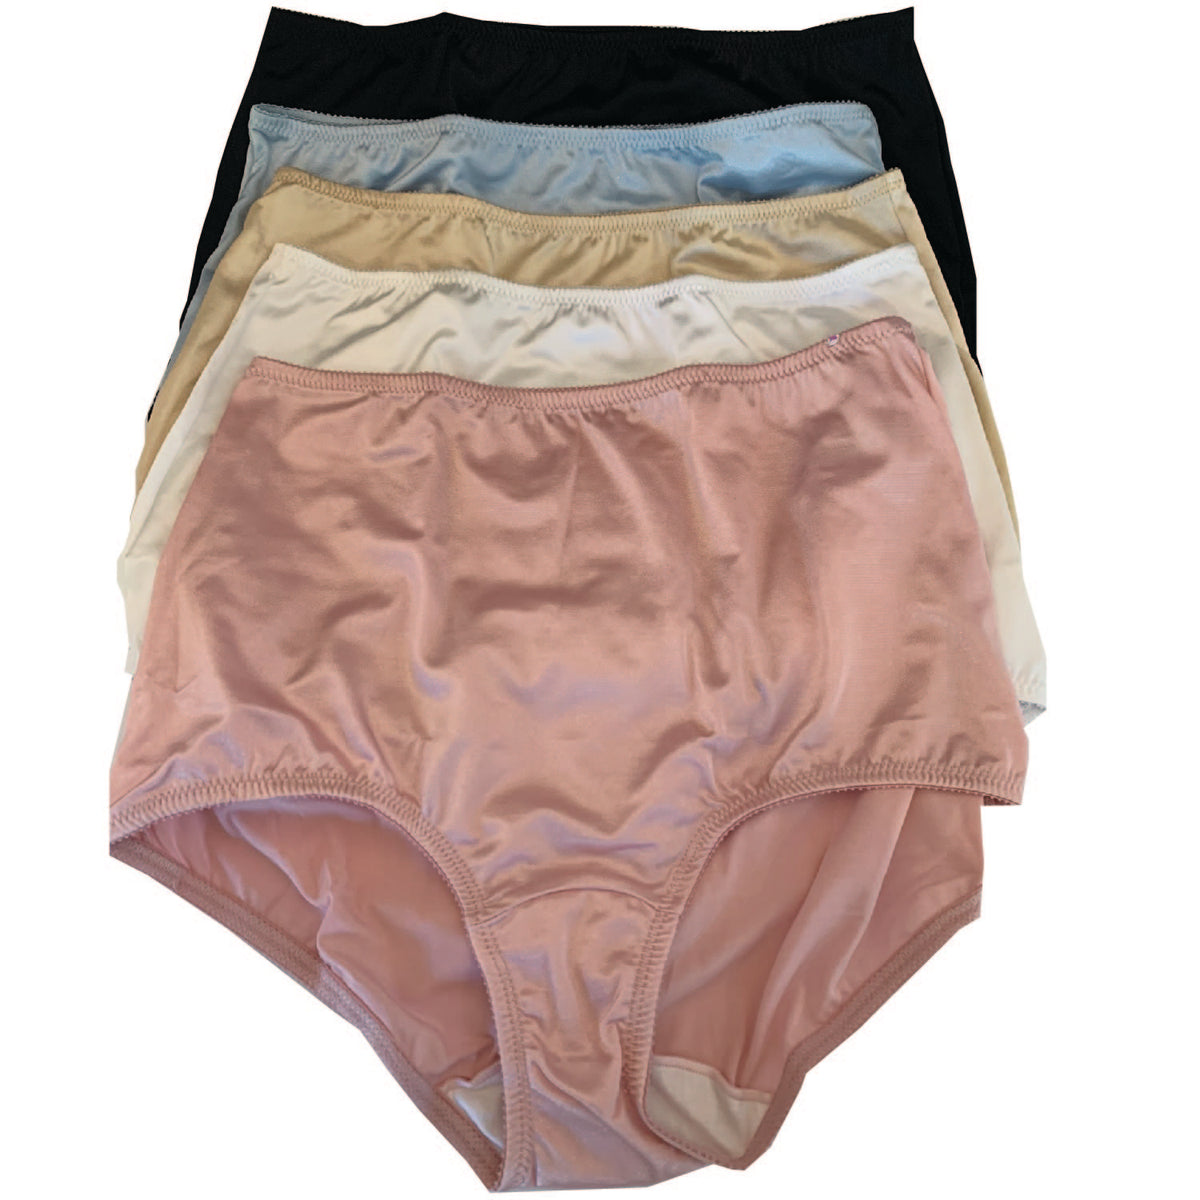 Women's Underwear Nylon Full Brief Panties - beige, black, white